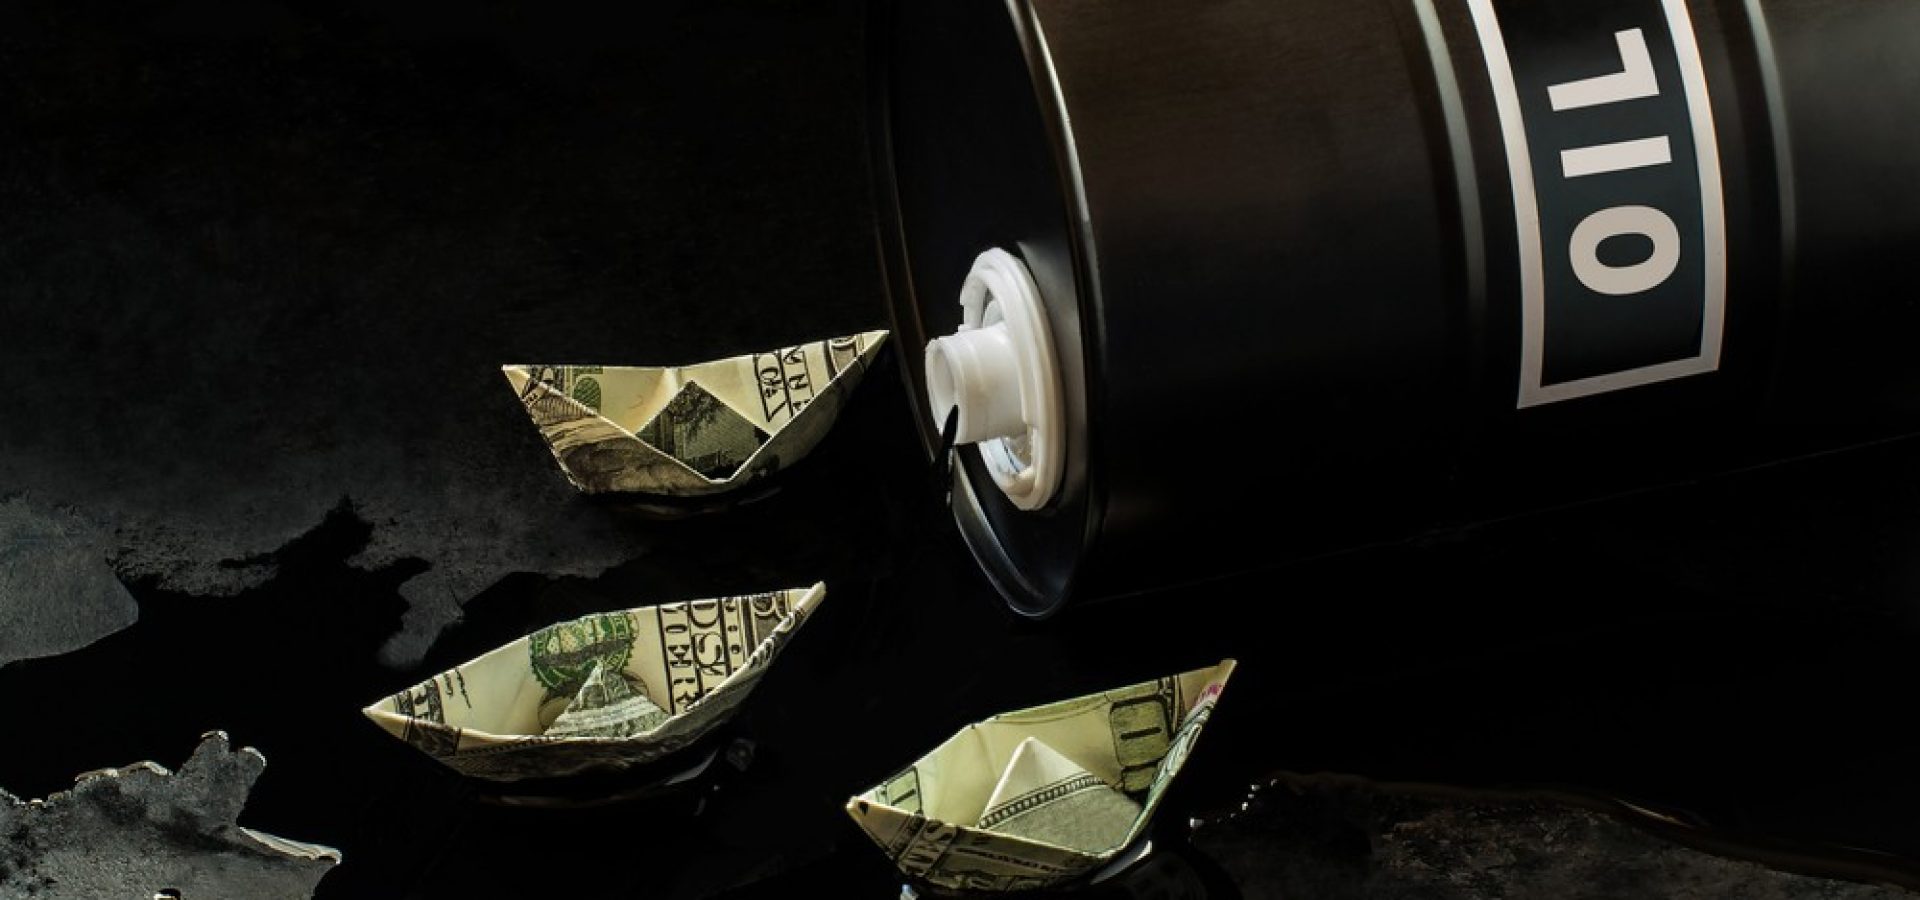 Wibest – Oil and petroleum: Oil barrel spilling crude and US dollar bills folded like boats floating.